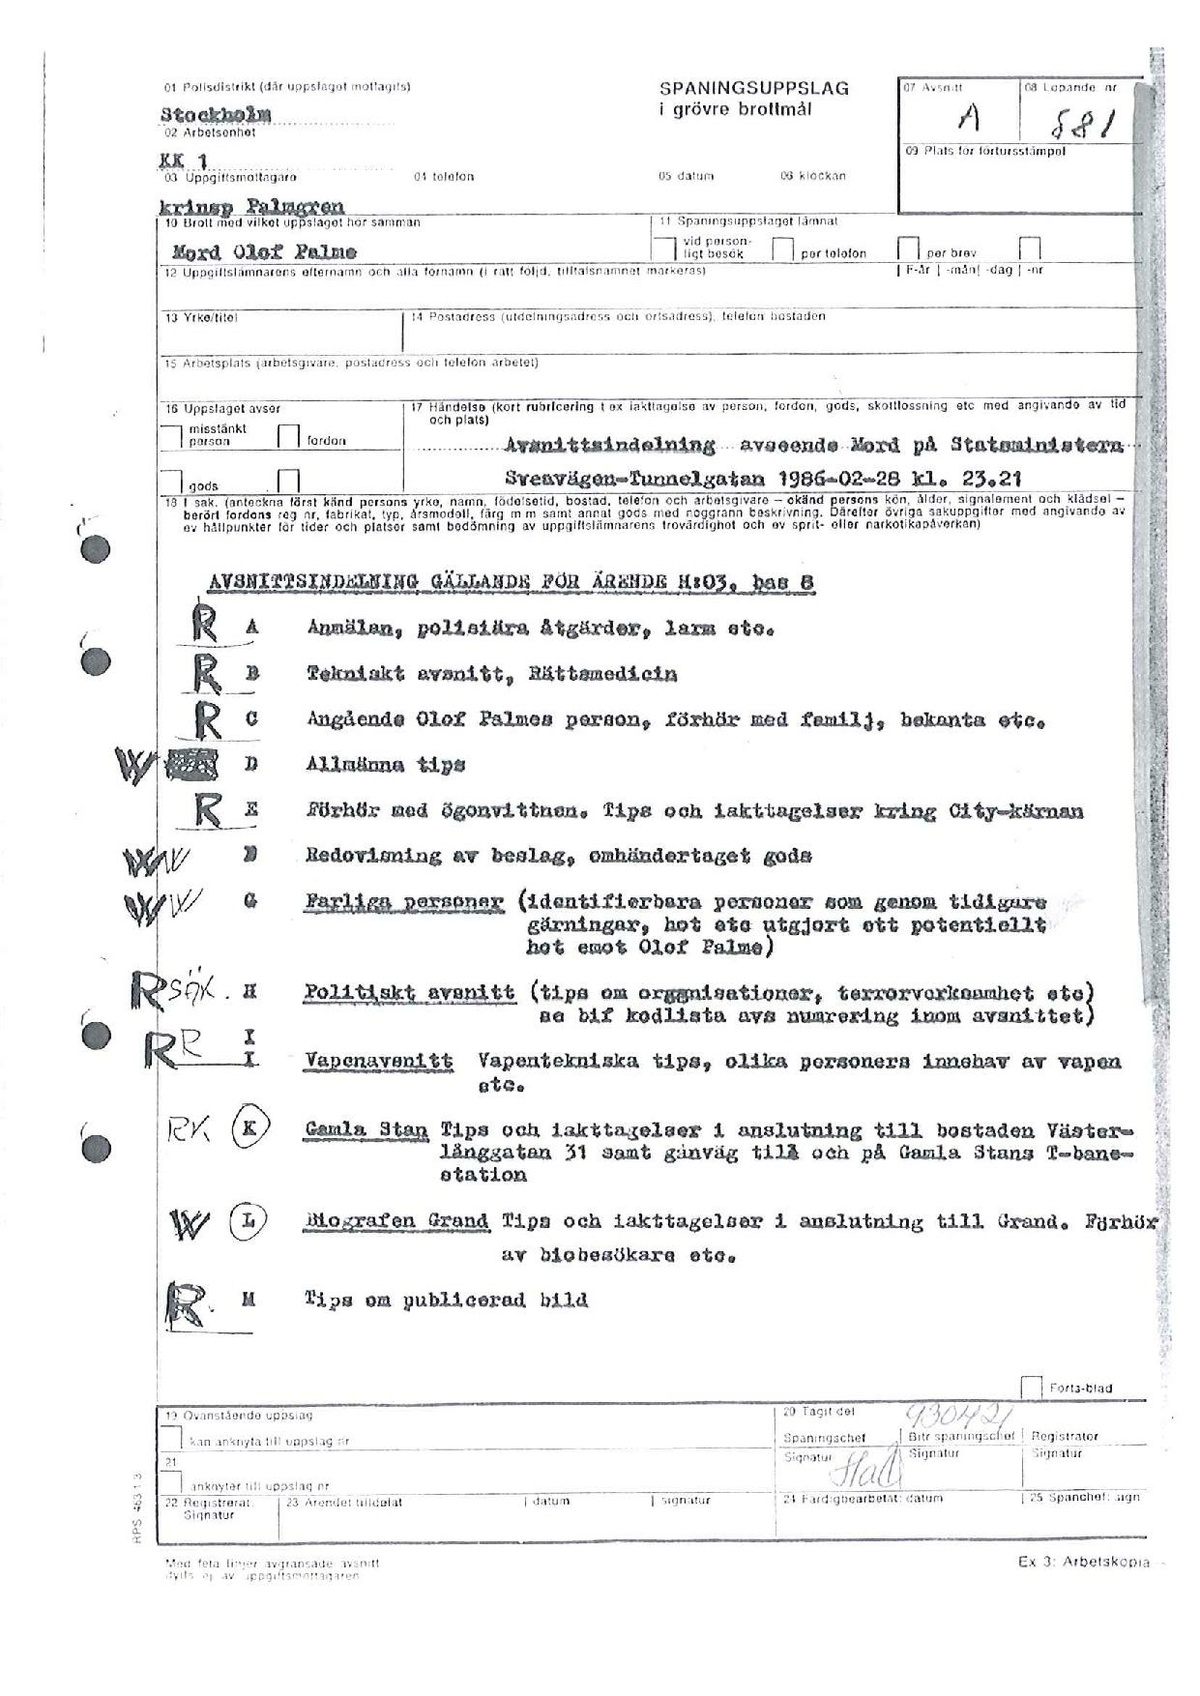 Pol-1988-03-01 A881-00 avsnittsindelning-palmemordet.pdf